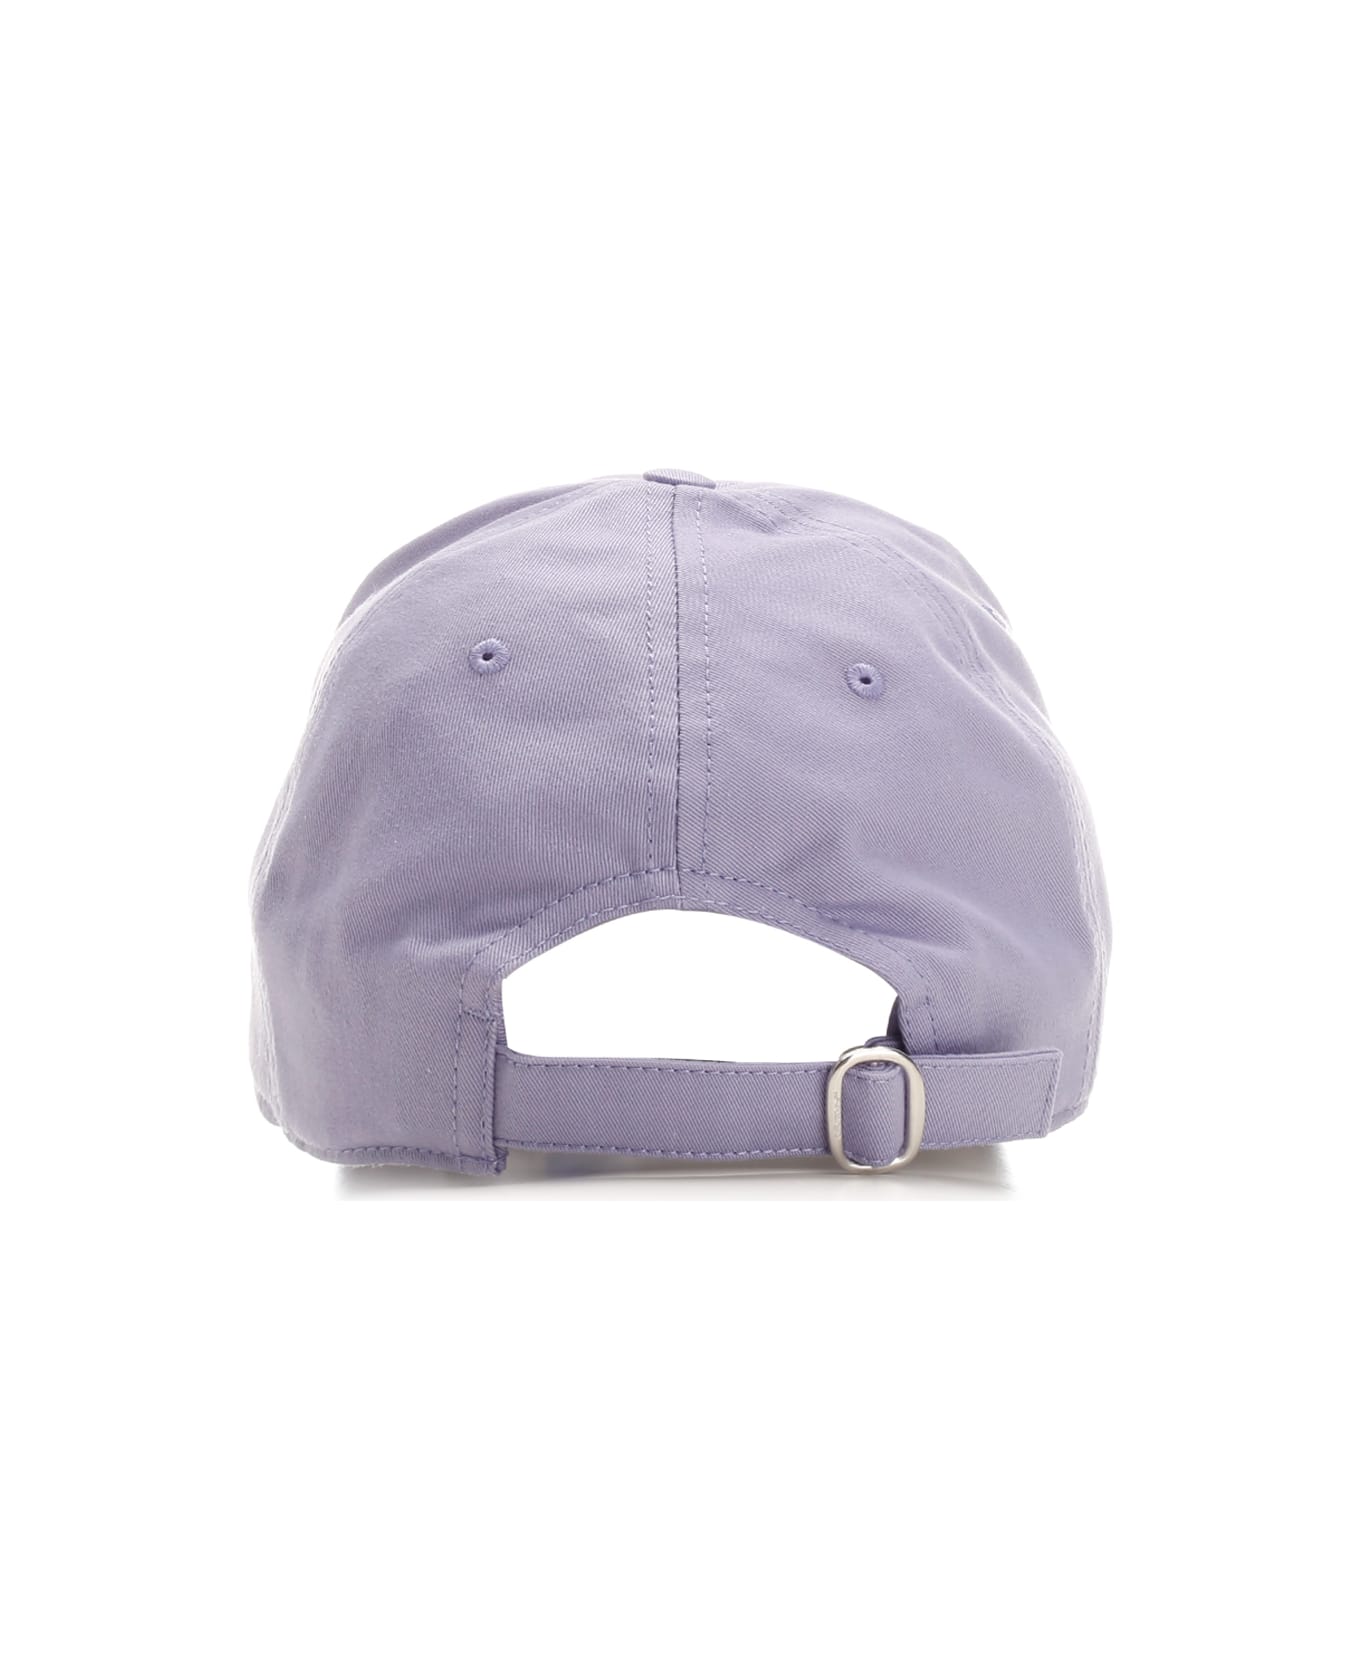 Off-White Baseball Cap - LILLAC 帽子